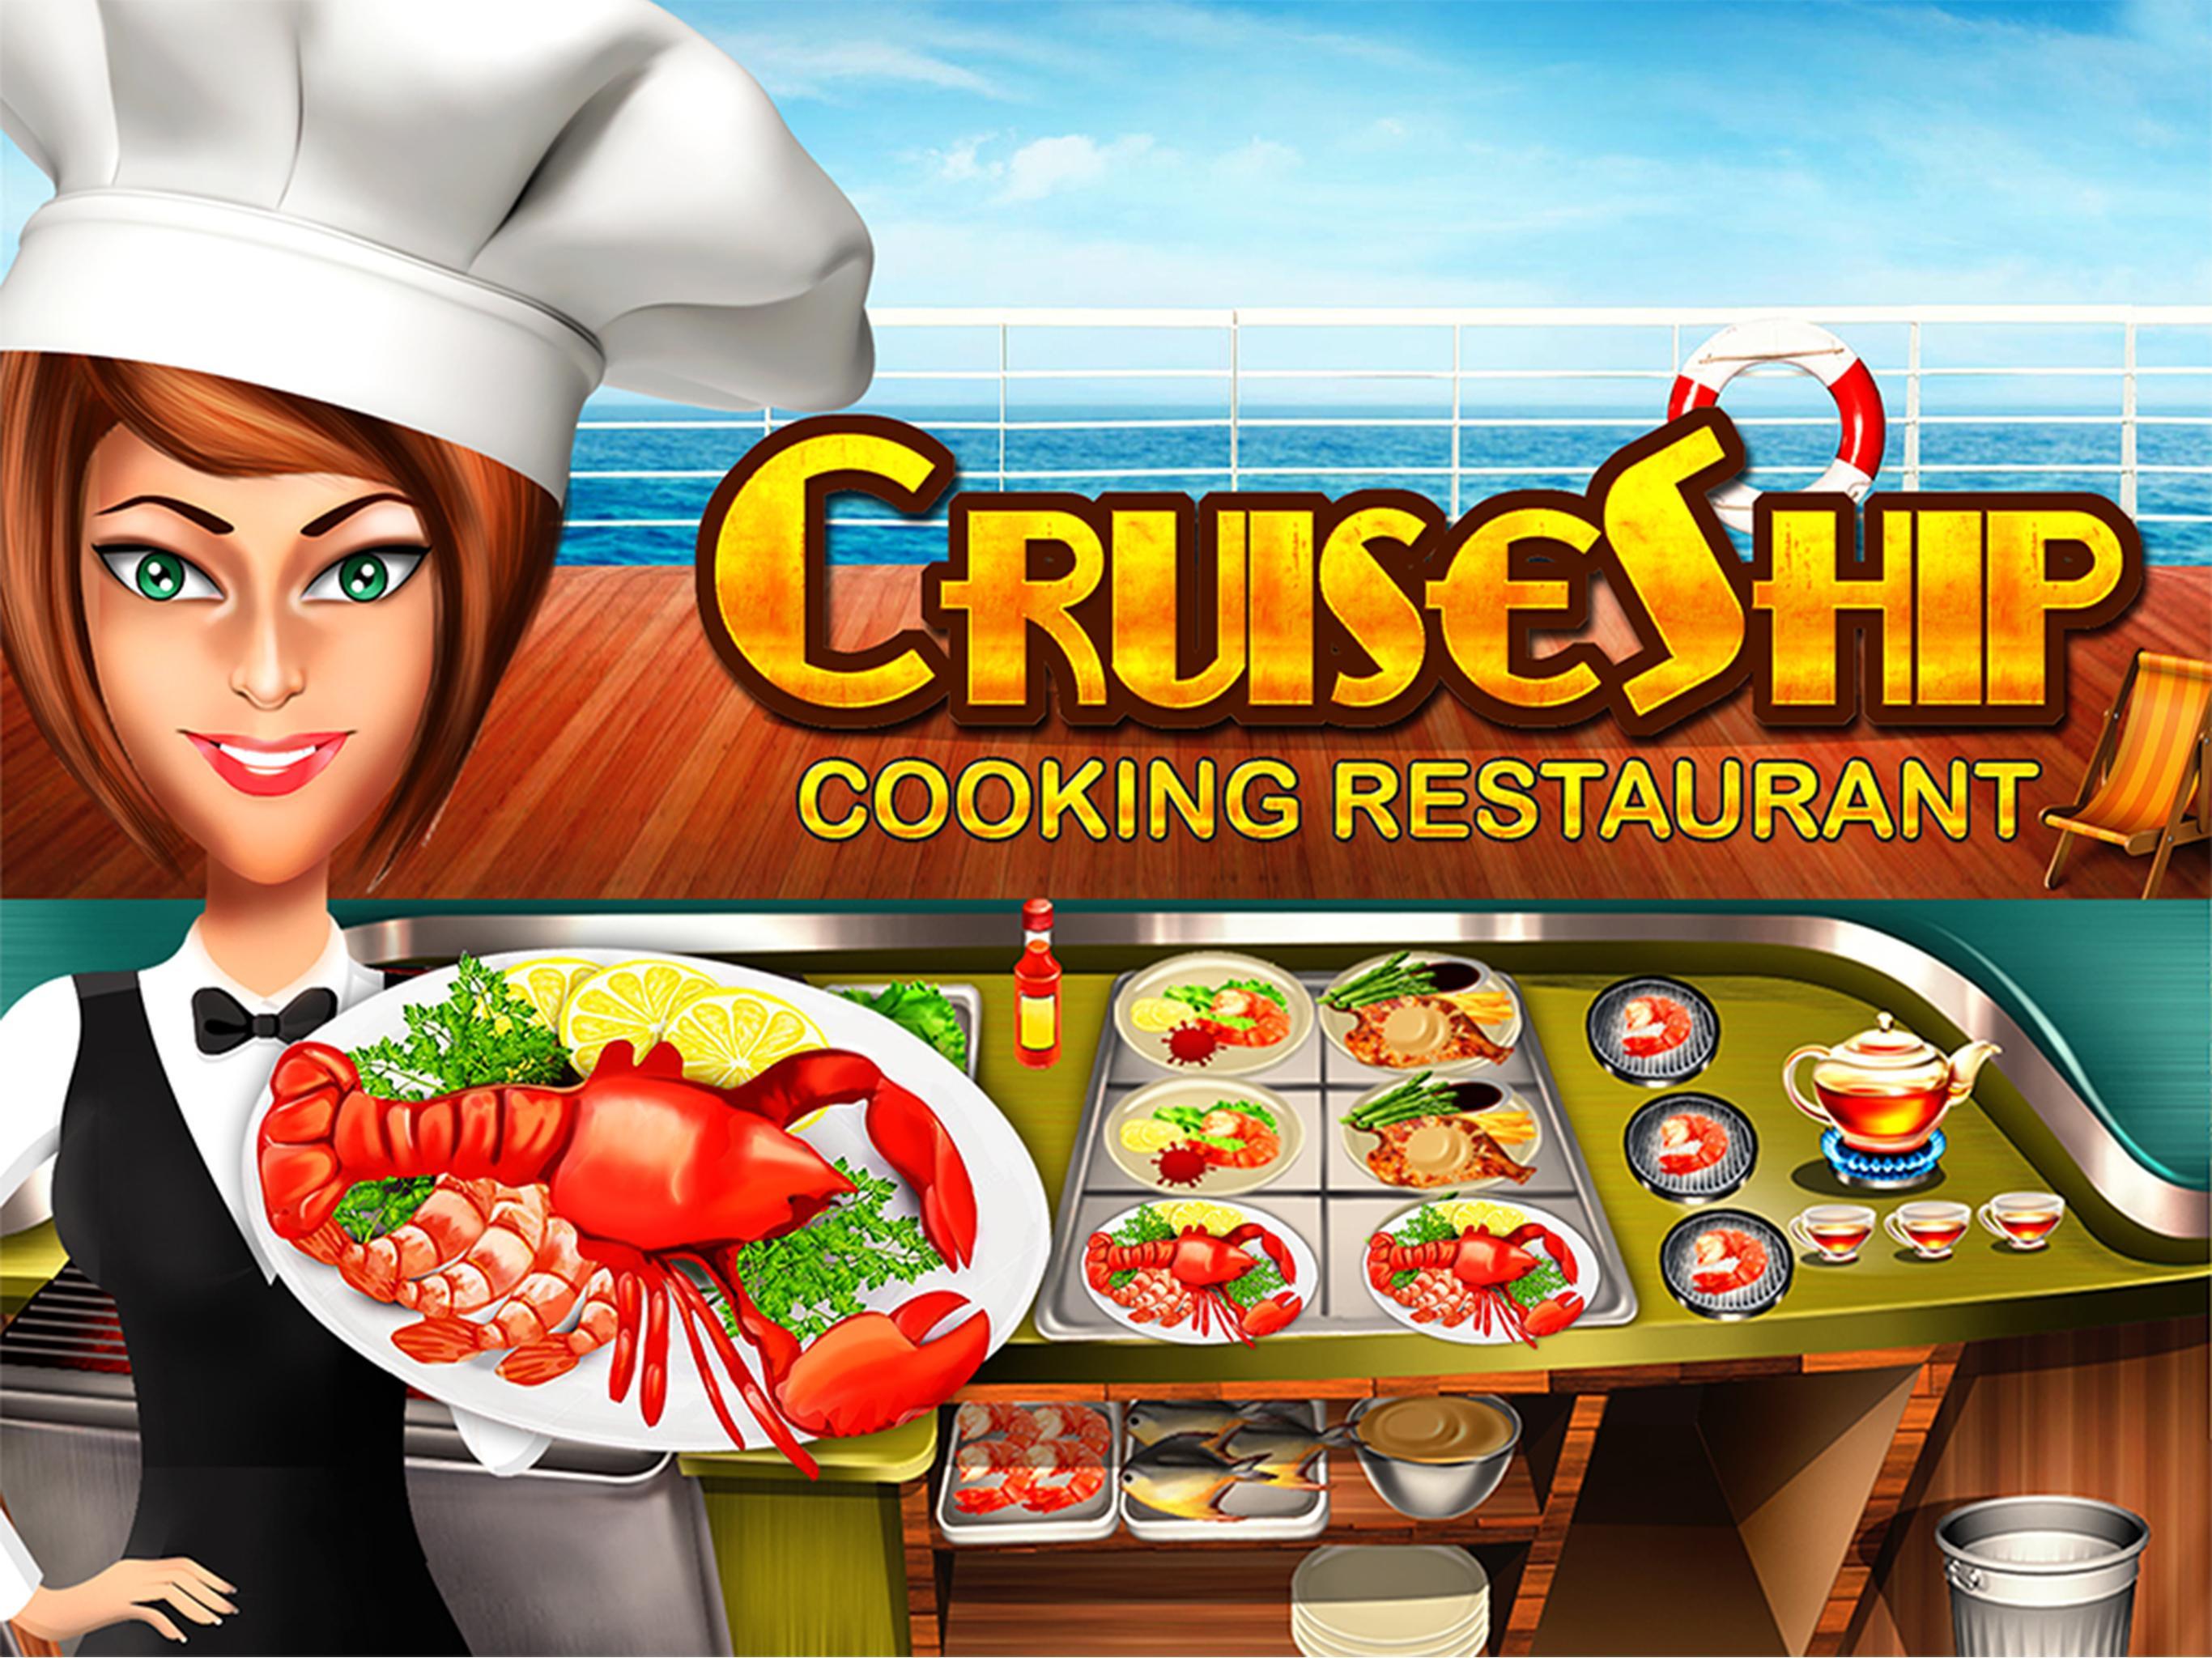 Игра Роял кукинг. Country Cooking Cruise круиз. Restaurant Cook. Ships Cook. Merge cooking theme